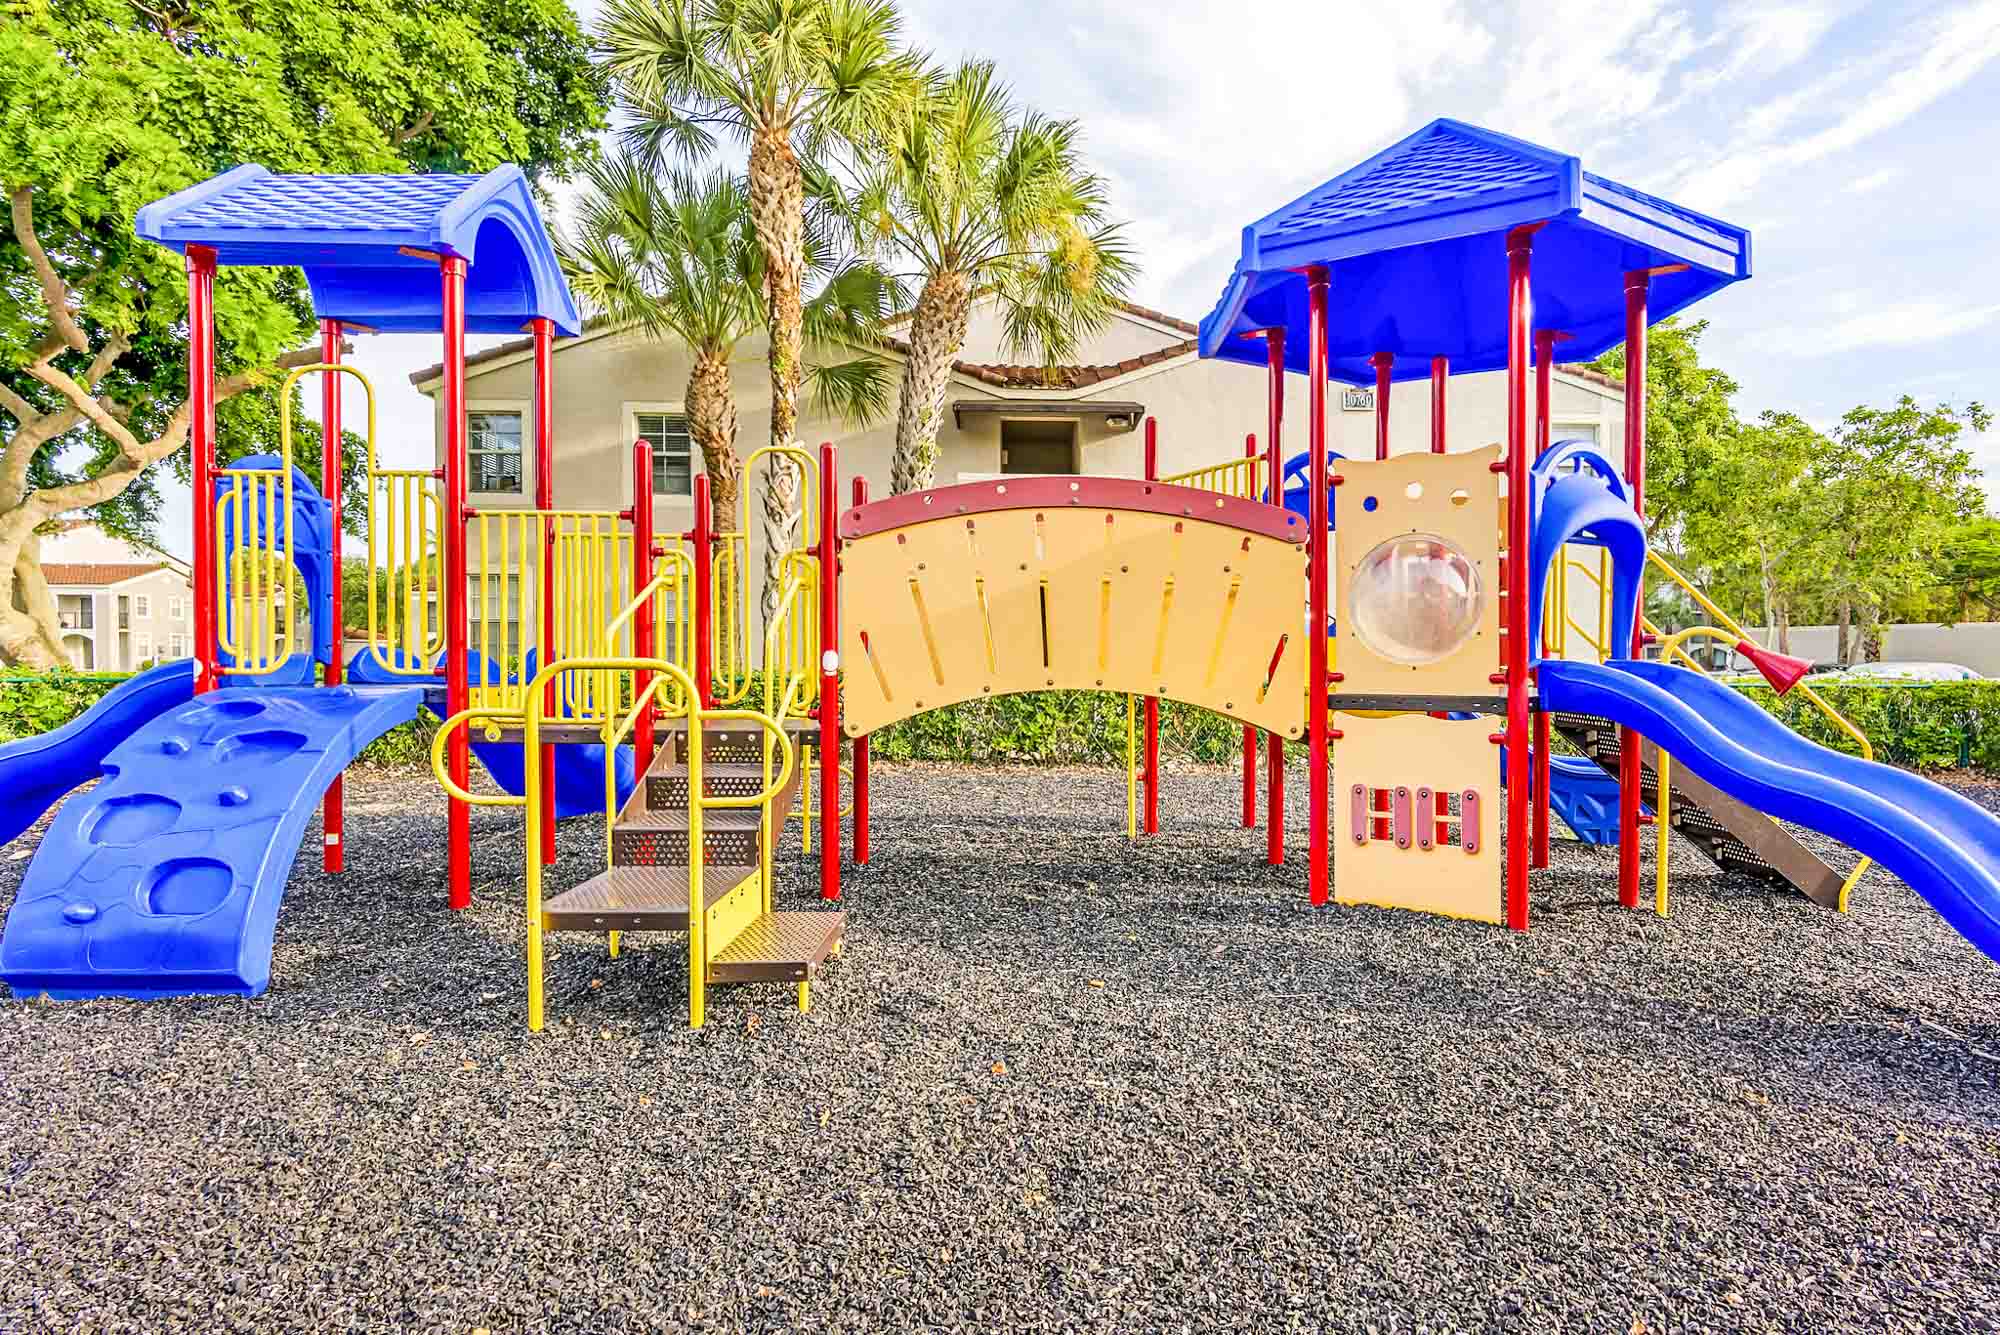 The playground at Miramar Lake in Fort Lauderdale, FL.